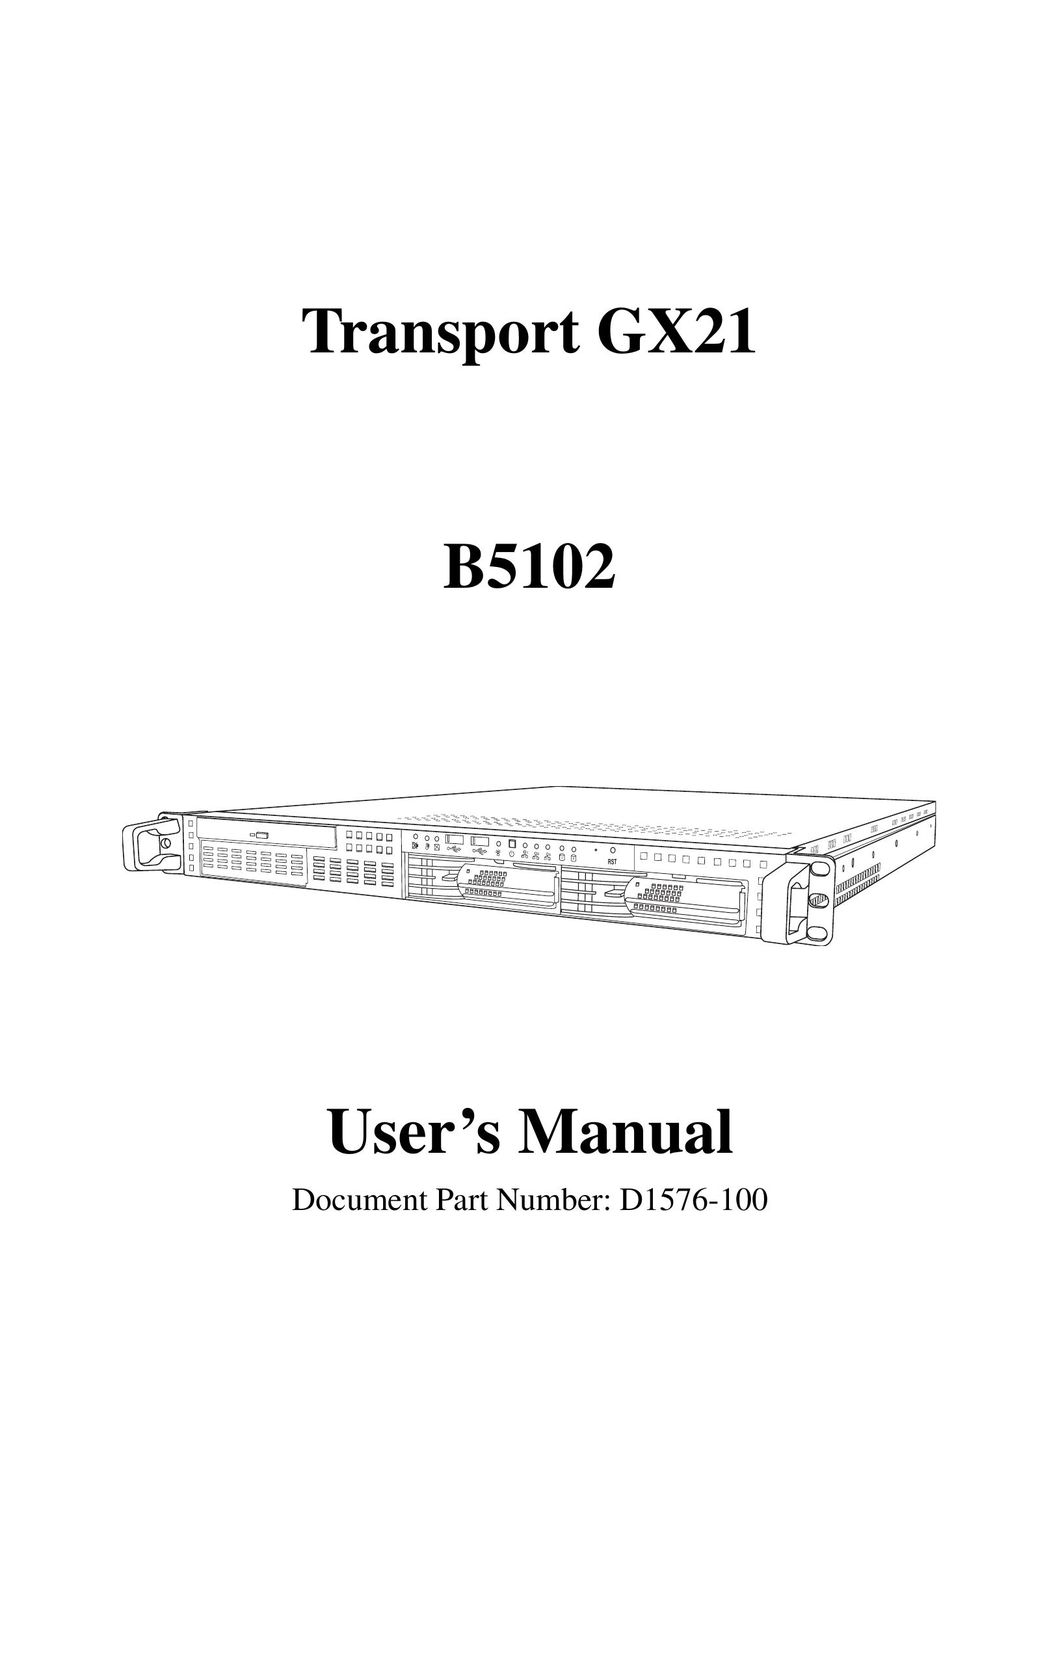 Tyan Computer GX21 Switch User Manual